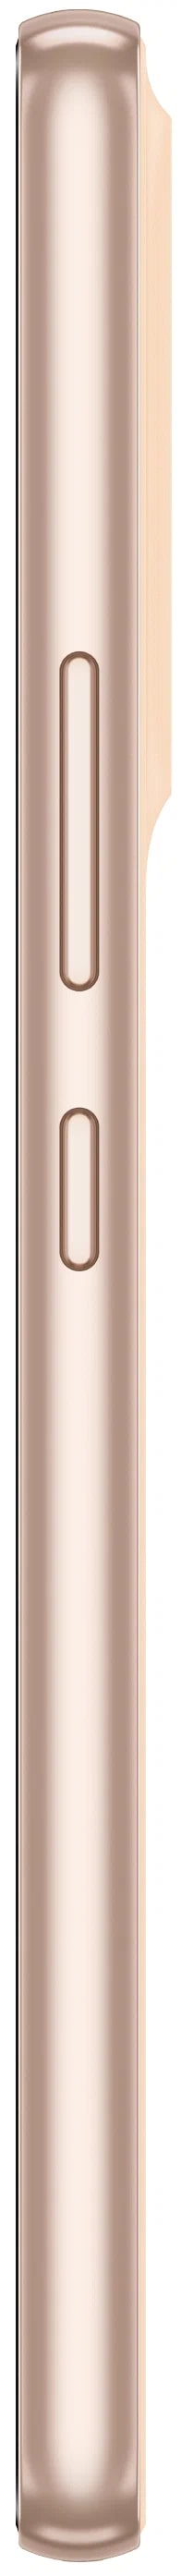 Телефон Samsung Galaxy A53 8+ 128Gb оранжевый (6 месяцев)